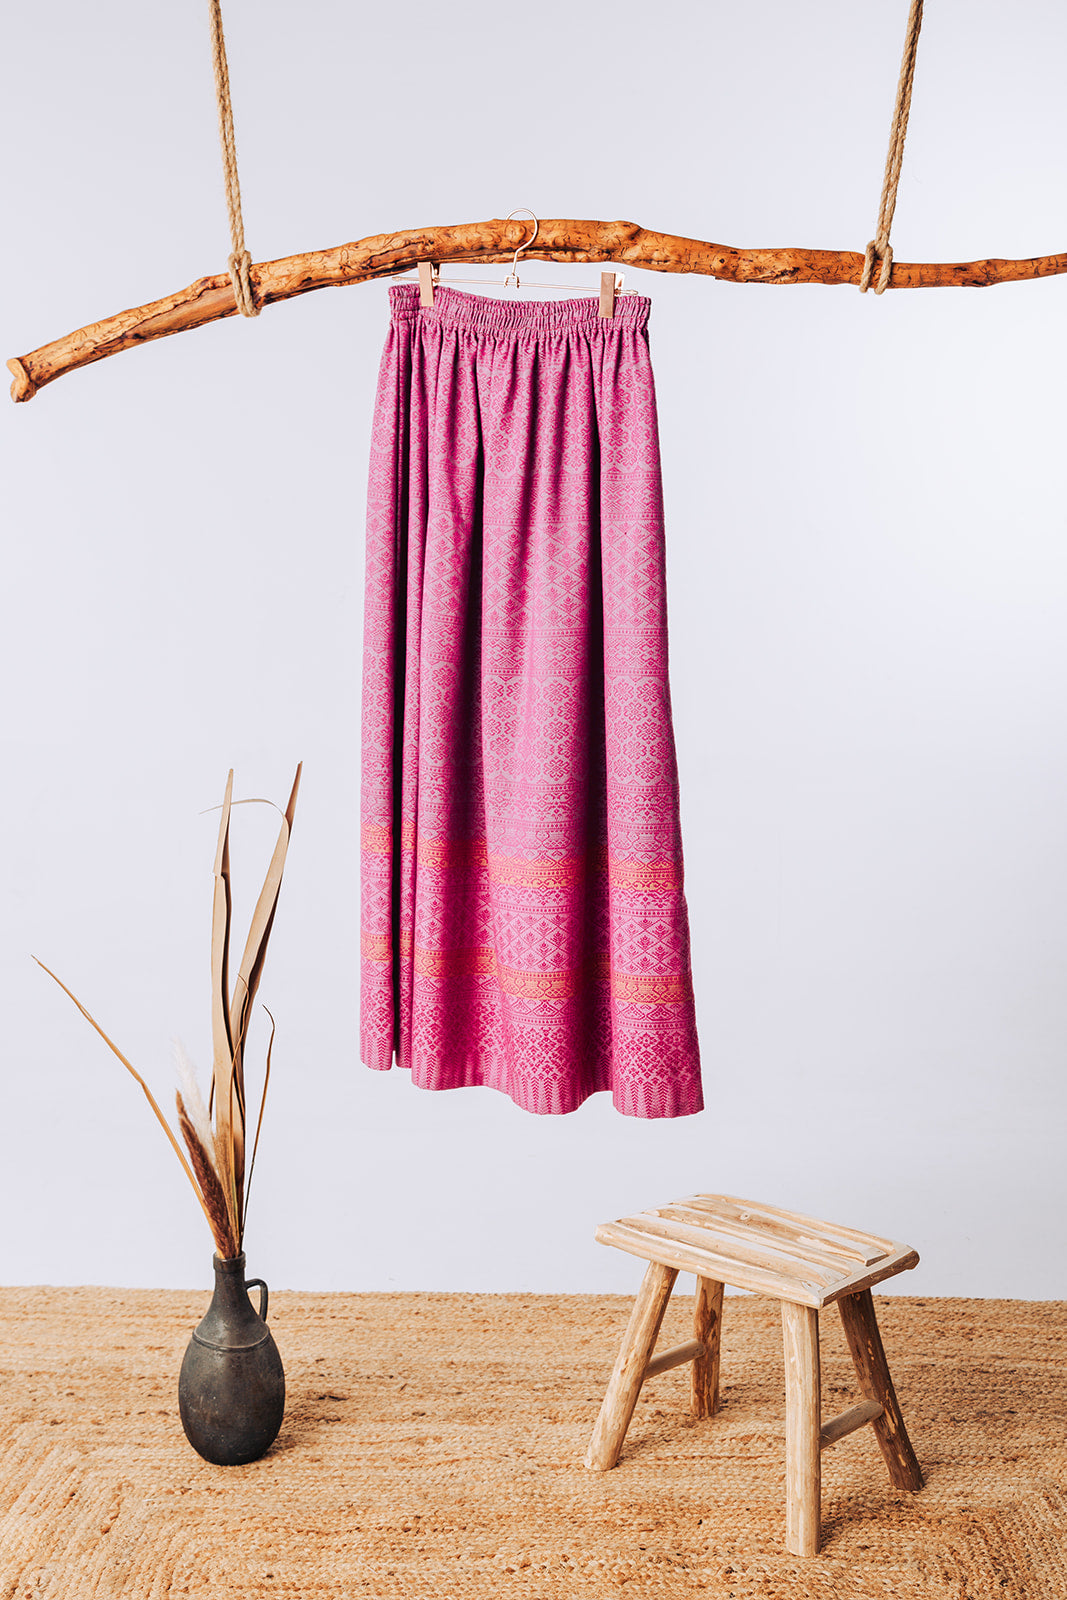 Mud-soaked cotton skirt